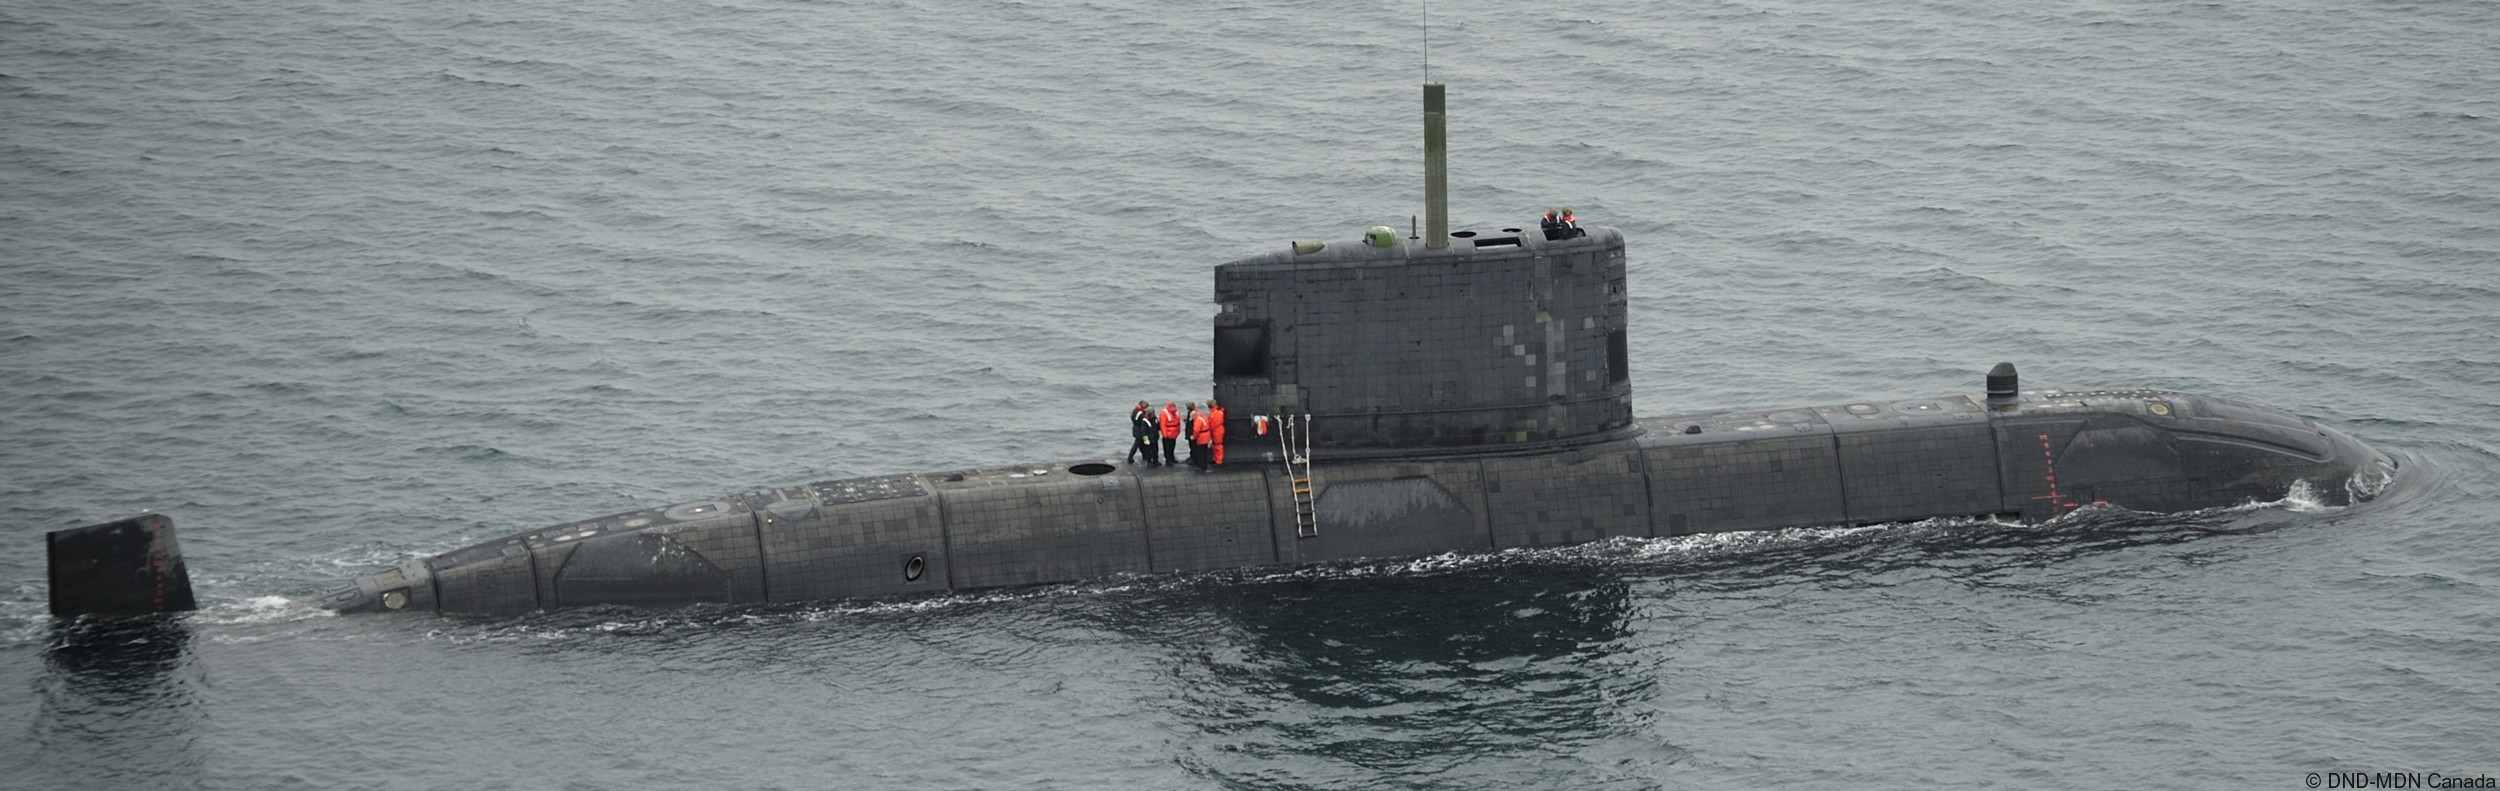 ssk-876 hmcs victoria upholder class attack submarine hunter killer ncsm royal canadian navy 31